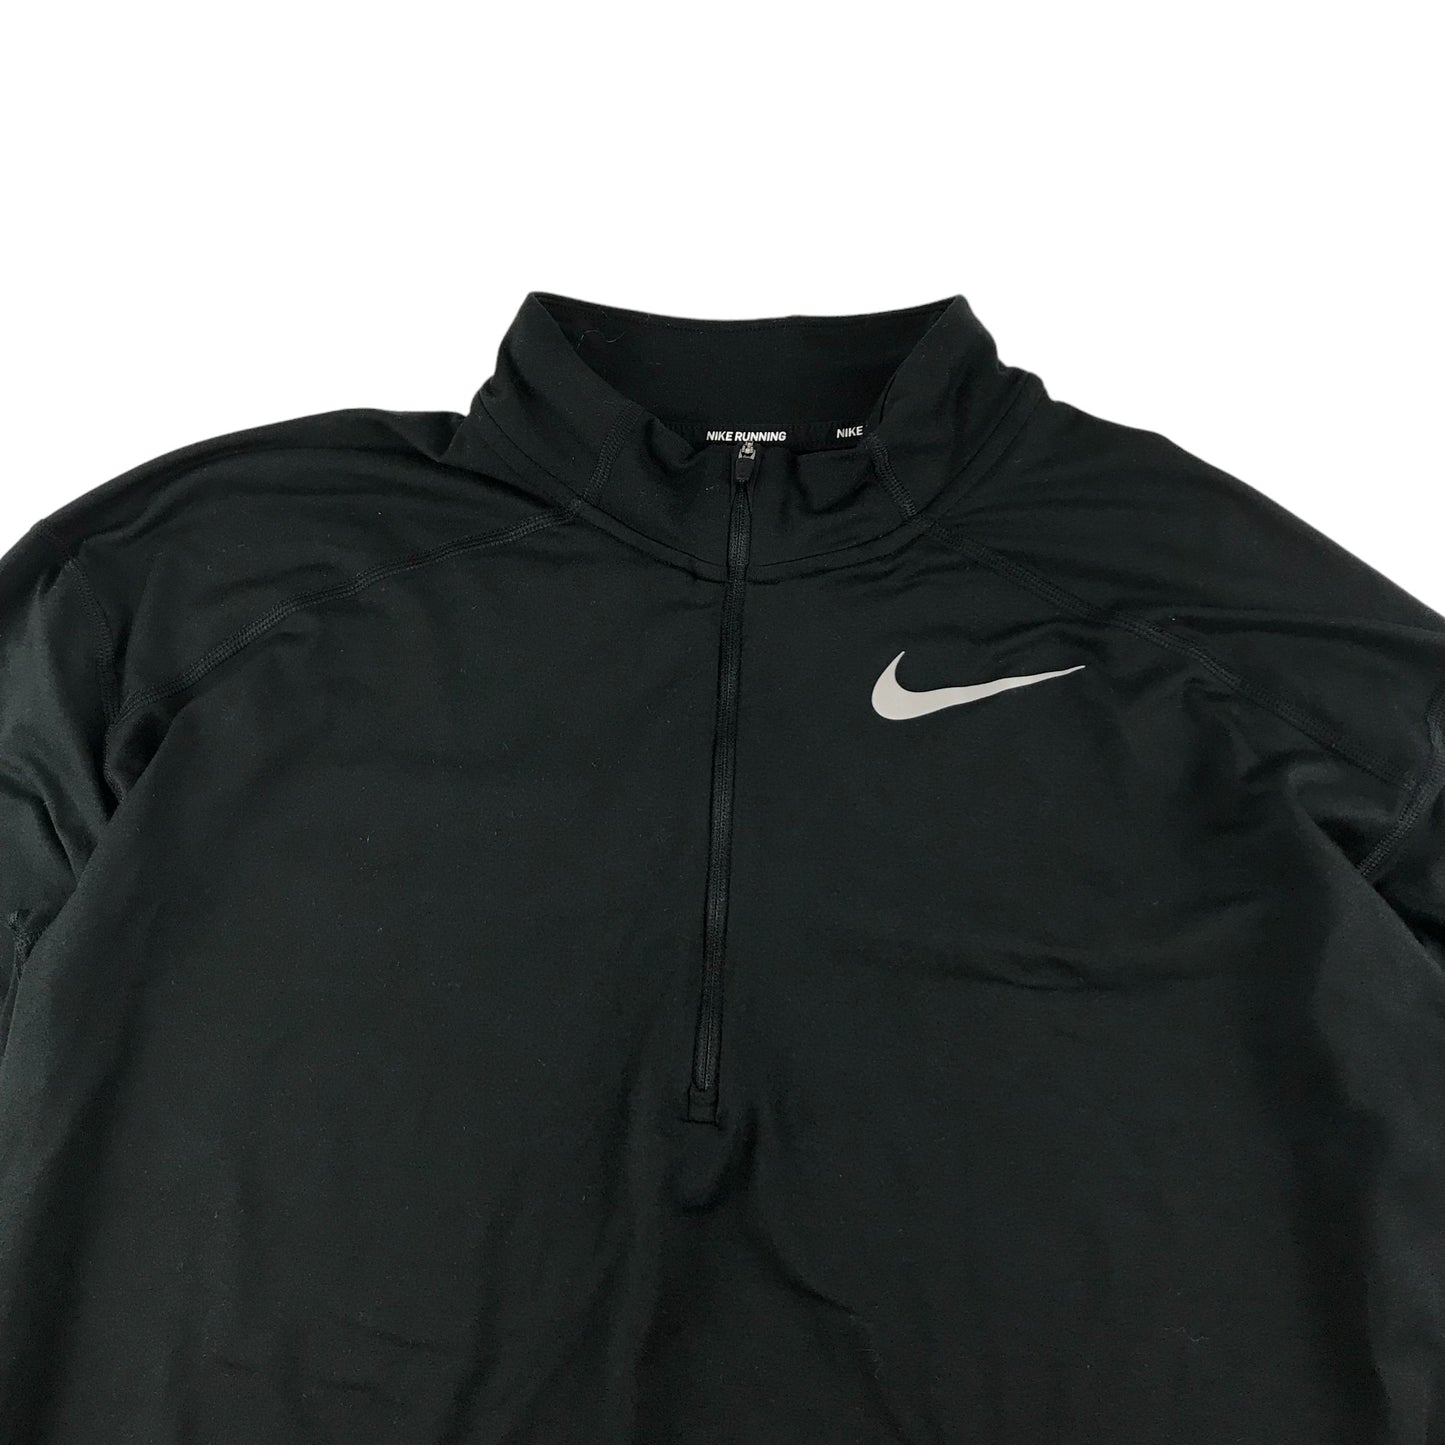 Nike Running Top Size Men's M Black Long Sleeve Half Zipper